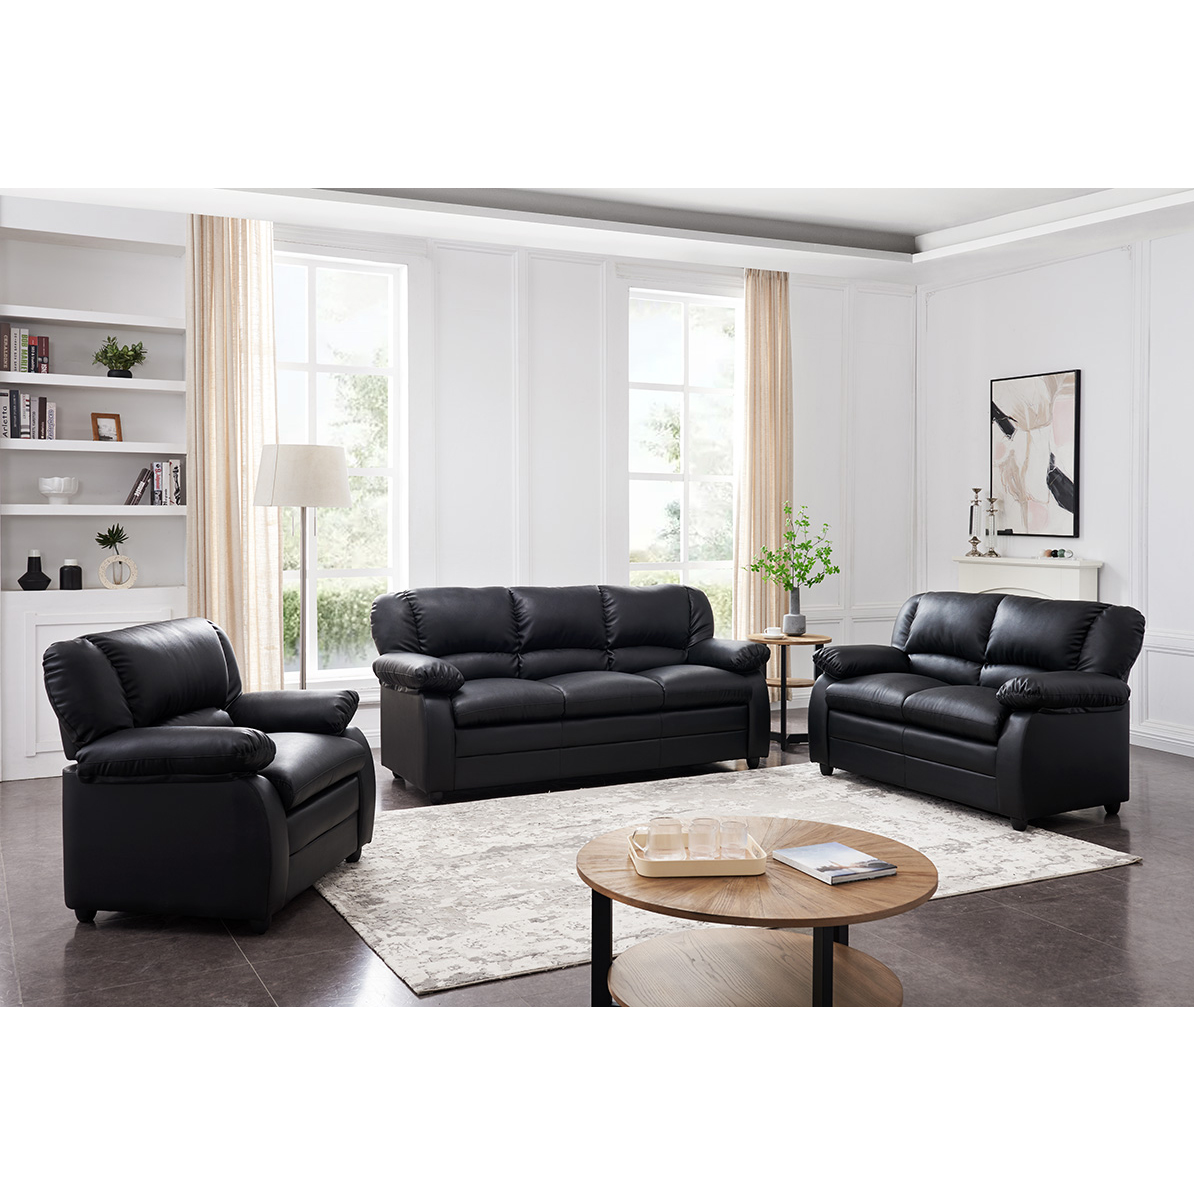 Abanda Leather Living Room Set (Black)